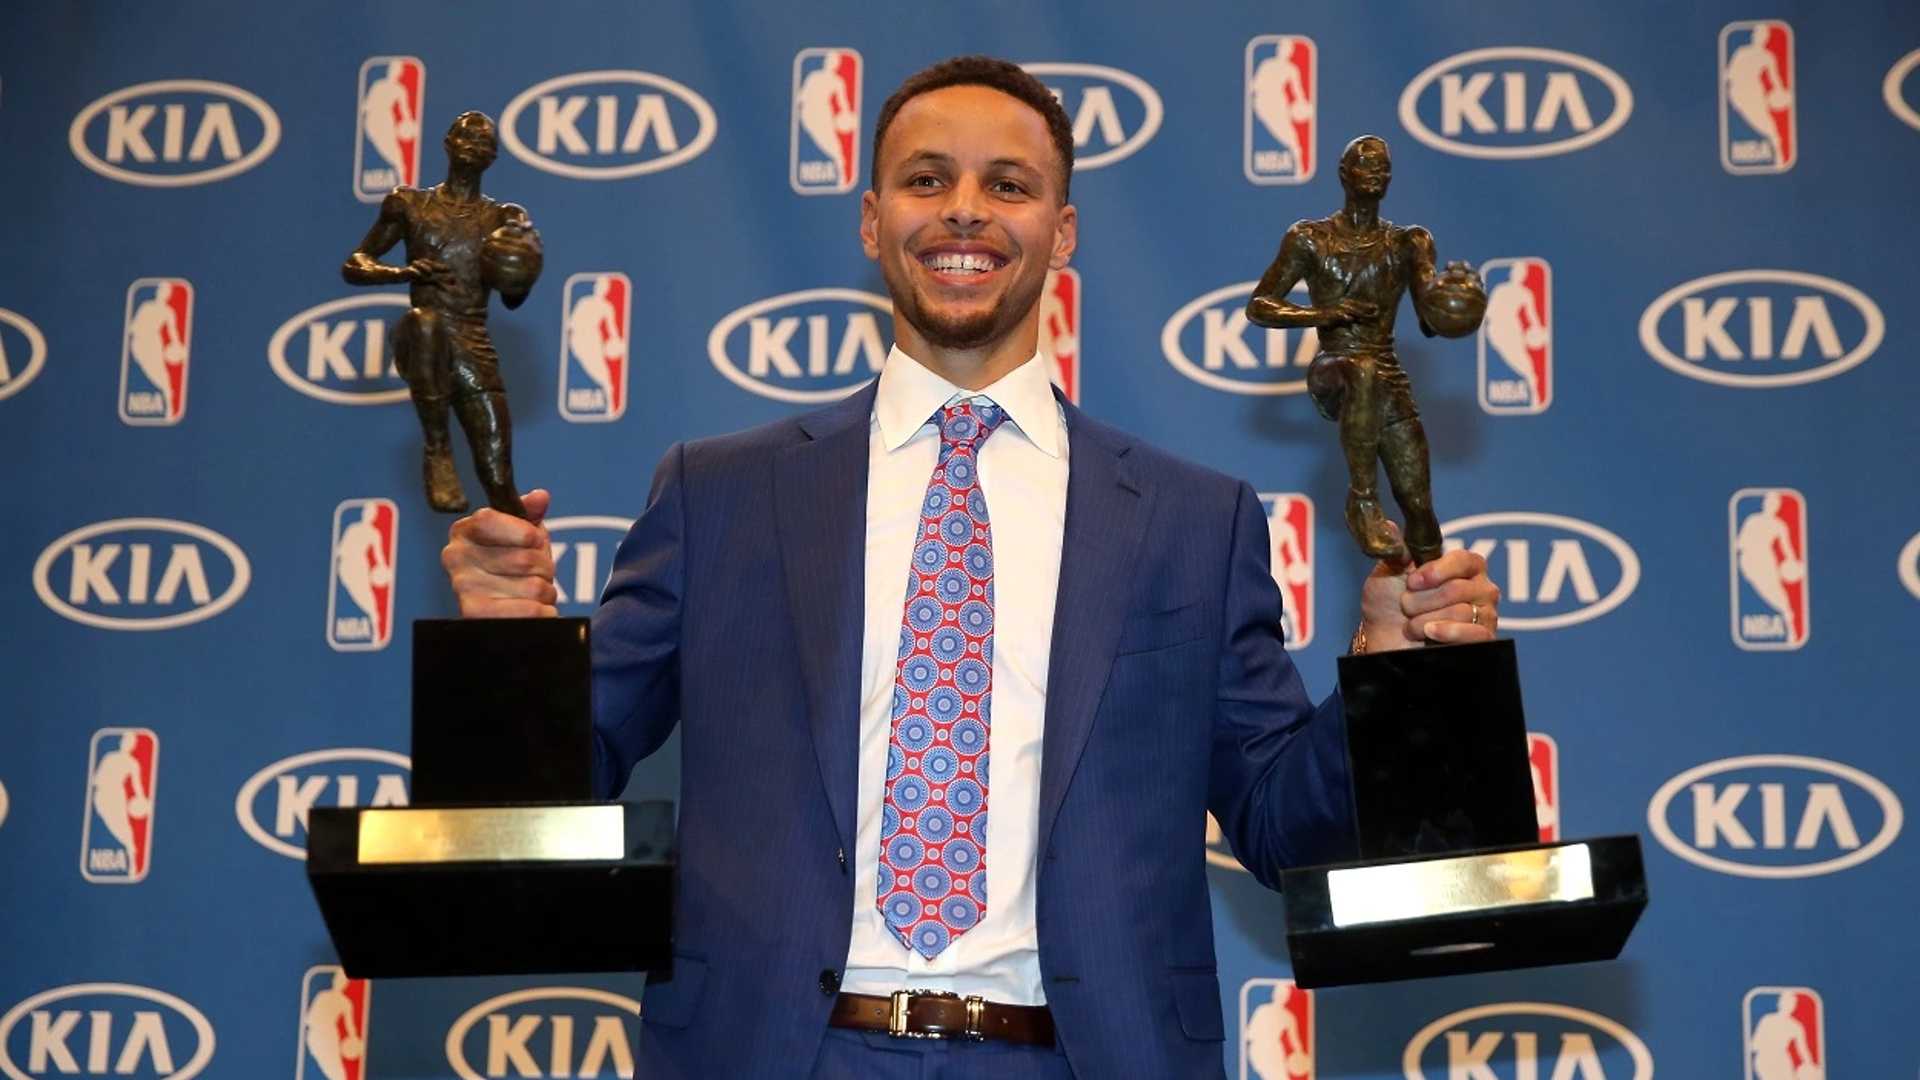 Stephen Curry won the regular season MVP award twice. (Image credits: twitter)